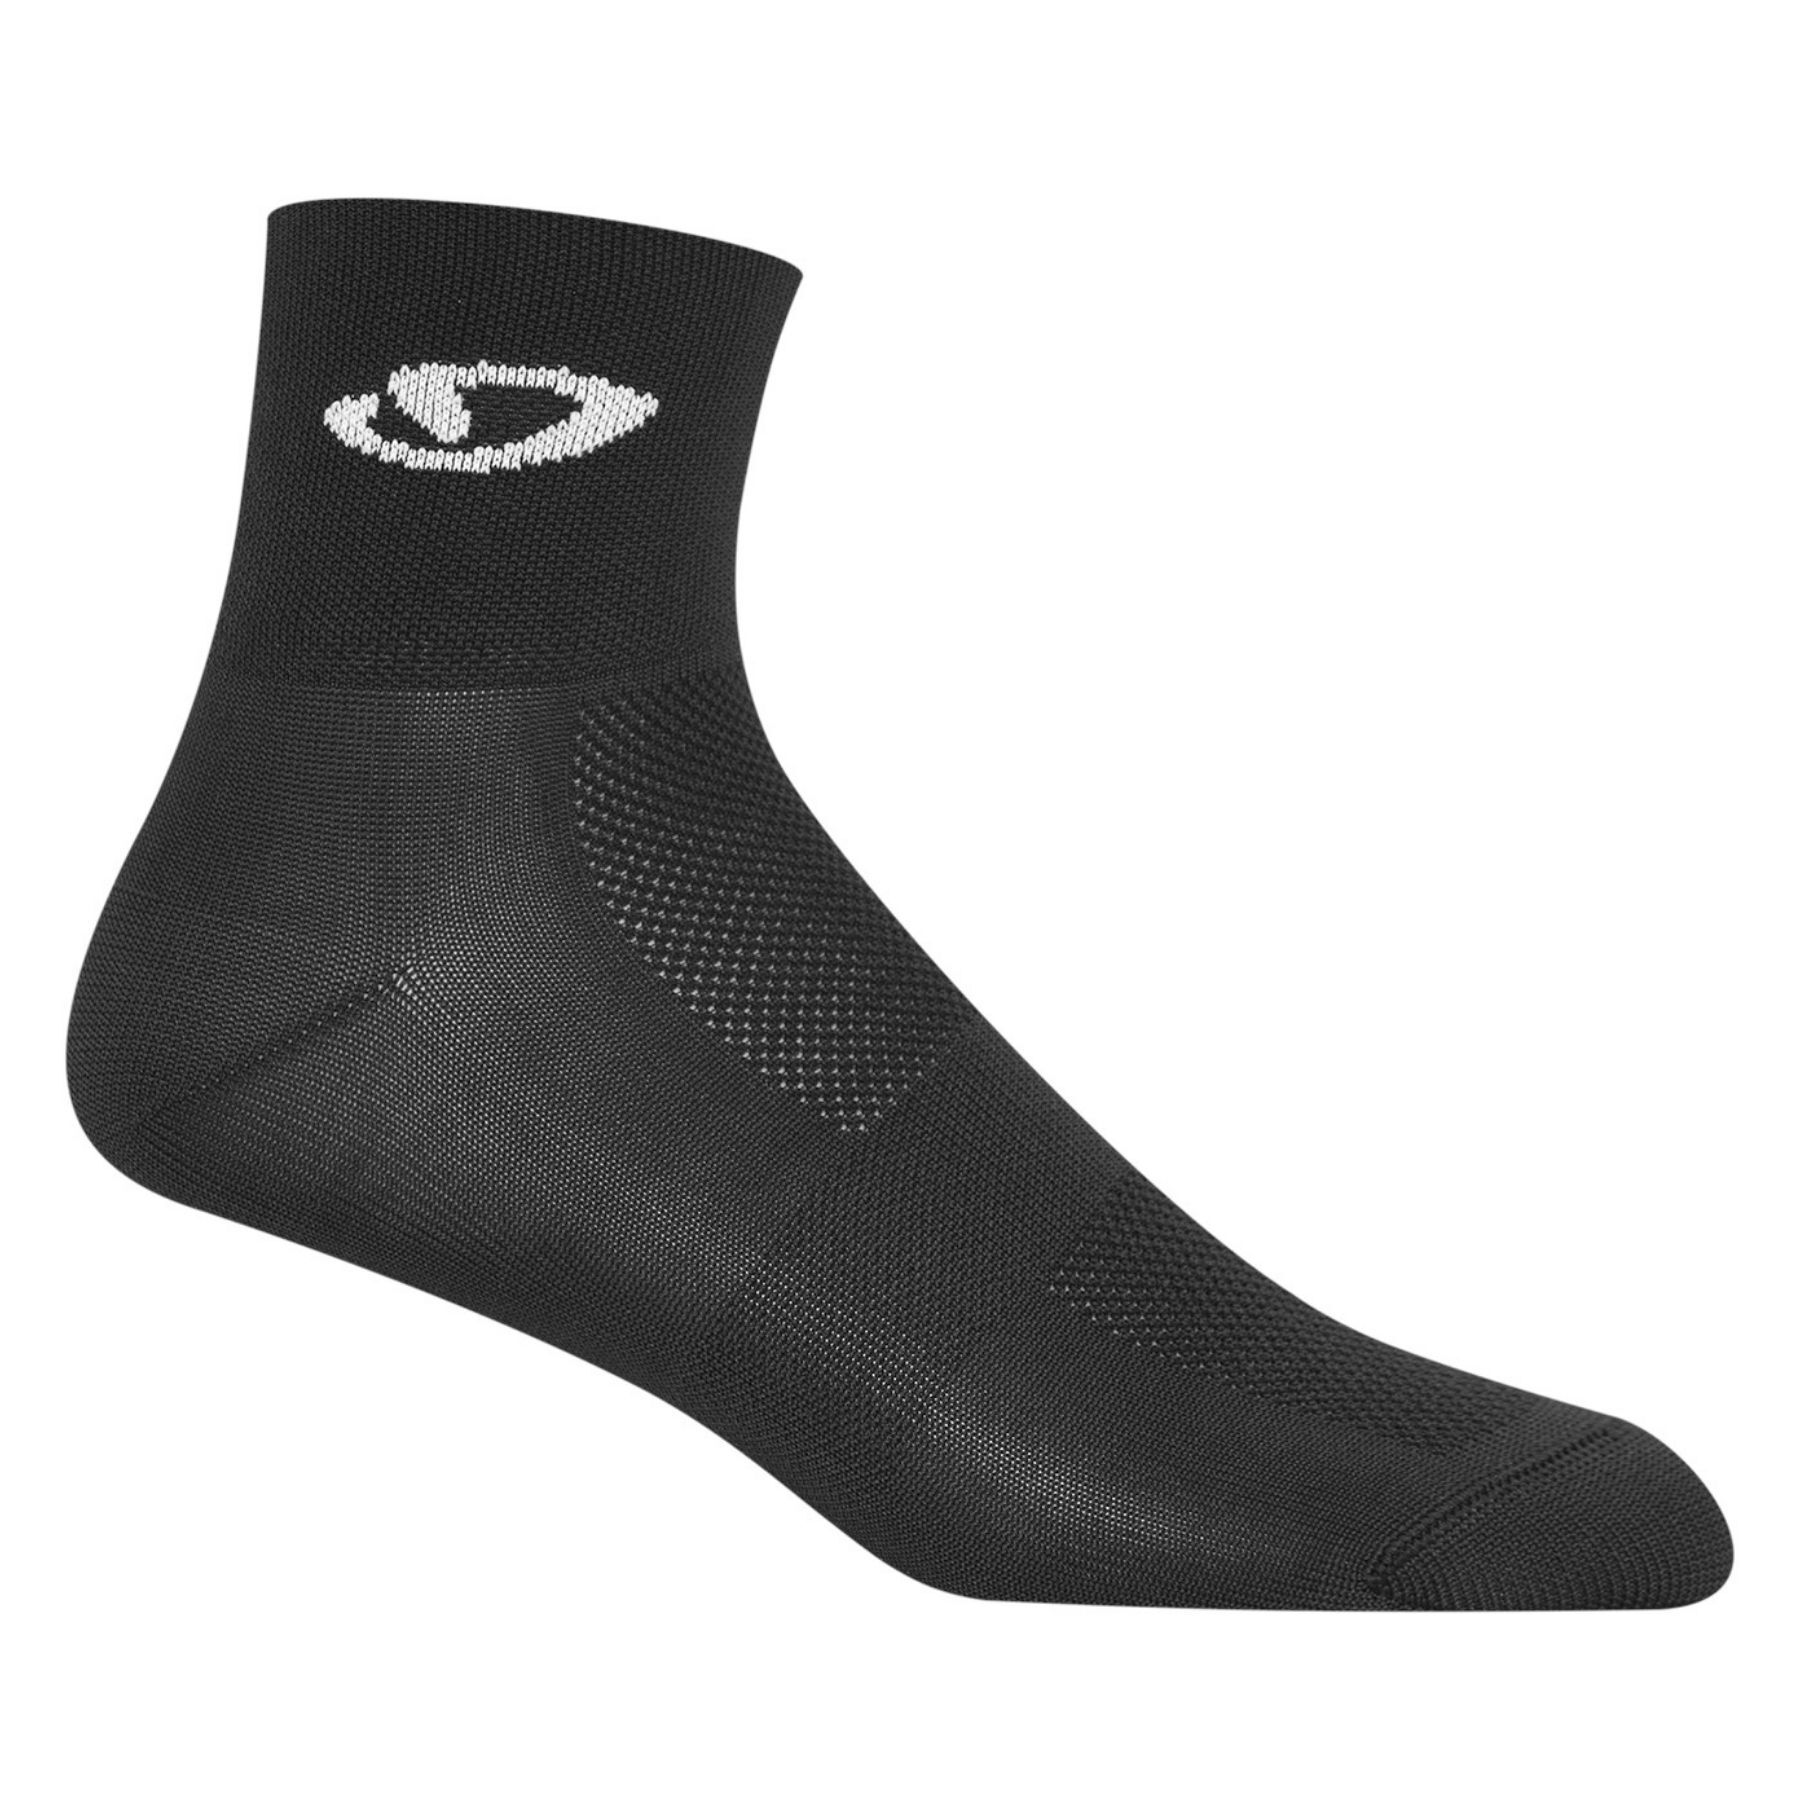 Giro Comp Racer - Cycling socks